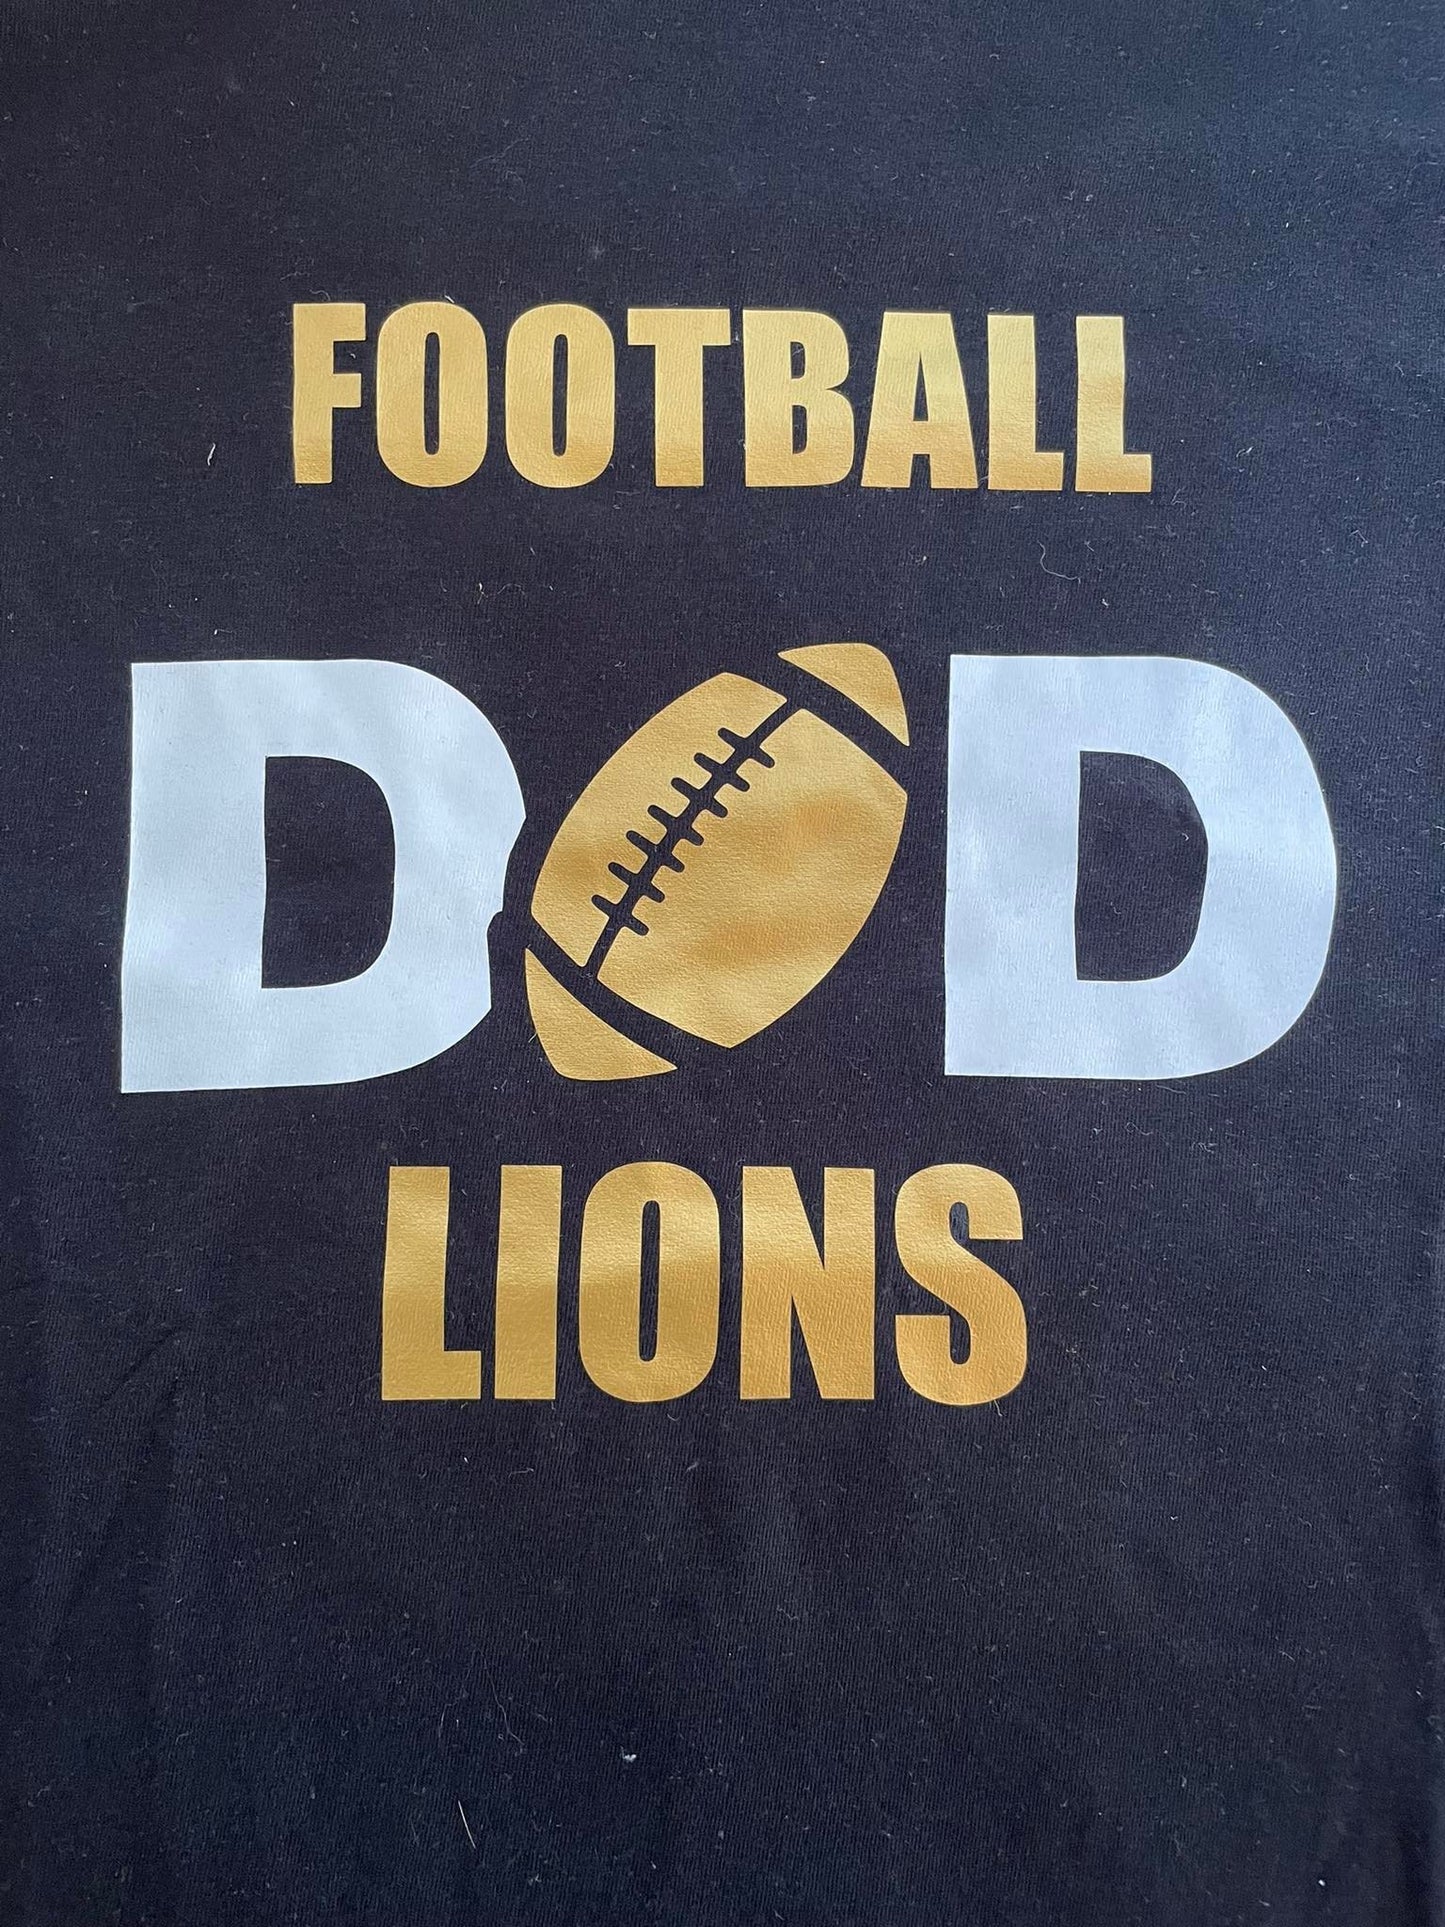 Hoddie Feldkirchen Lions Fanwear  "FOOTBALL DAD2"